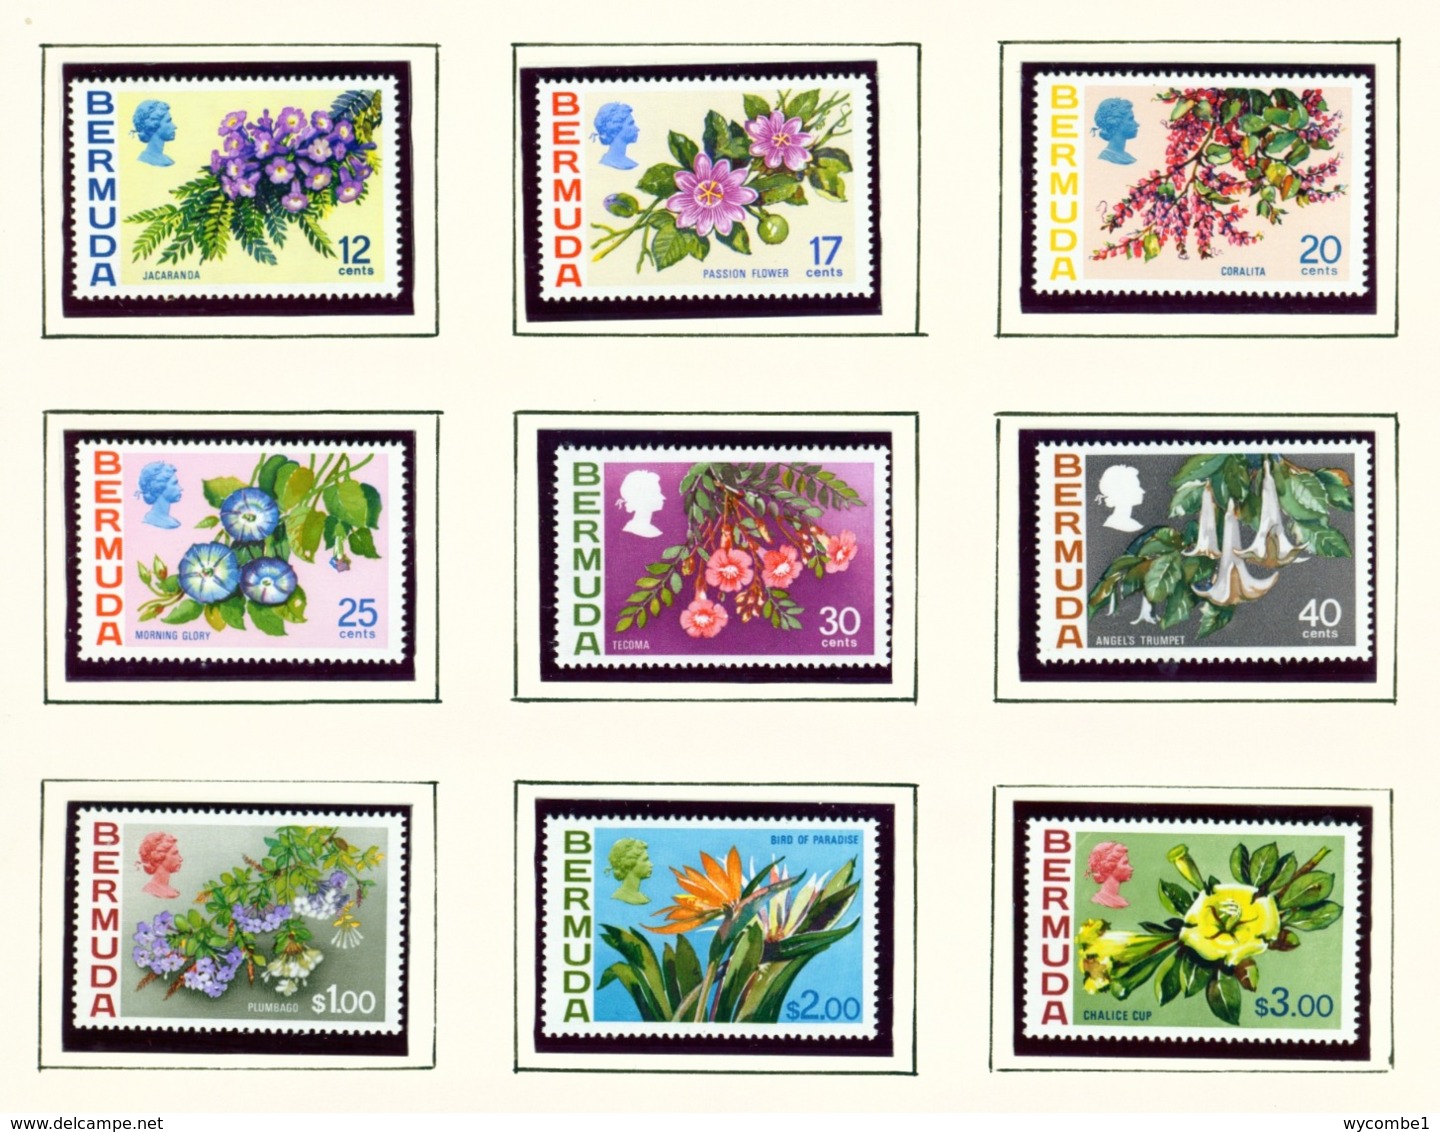 BERMUDA  -  1970-75 Flower Definitives  Set Unmounted/Never Hinged Mint - Bermuda